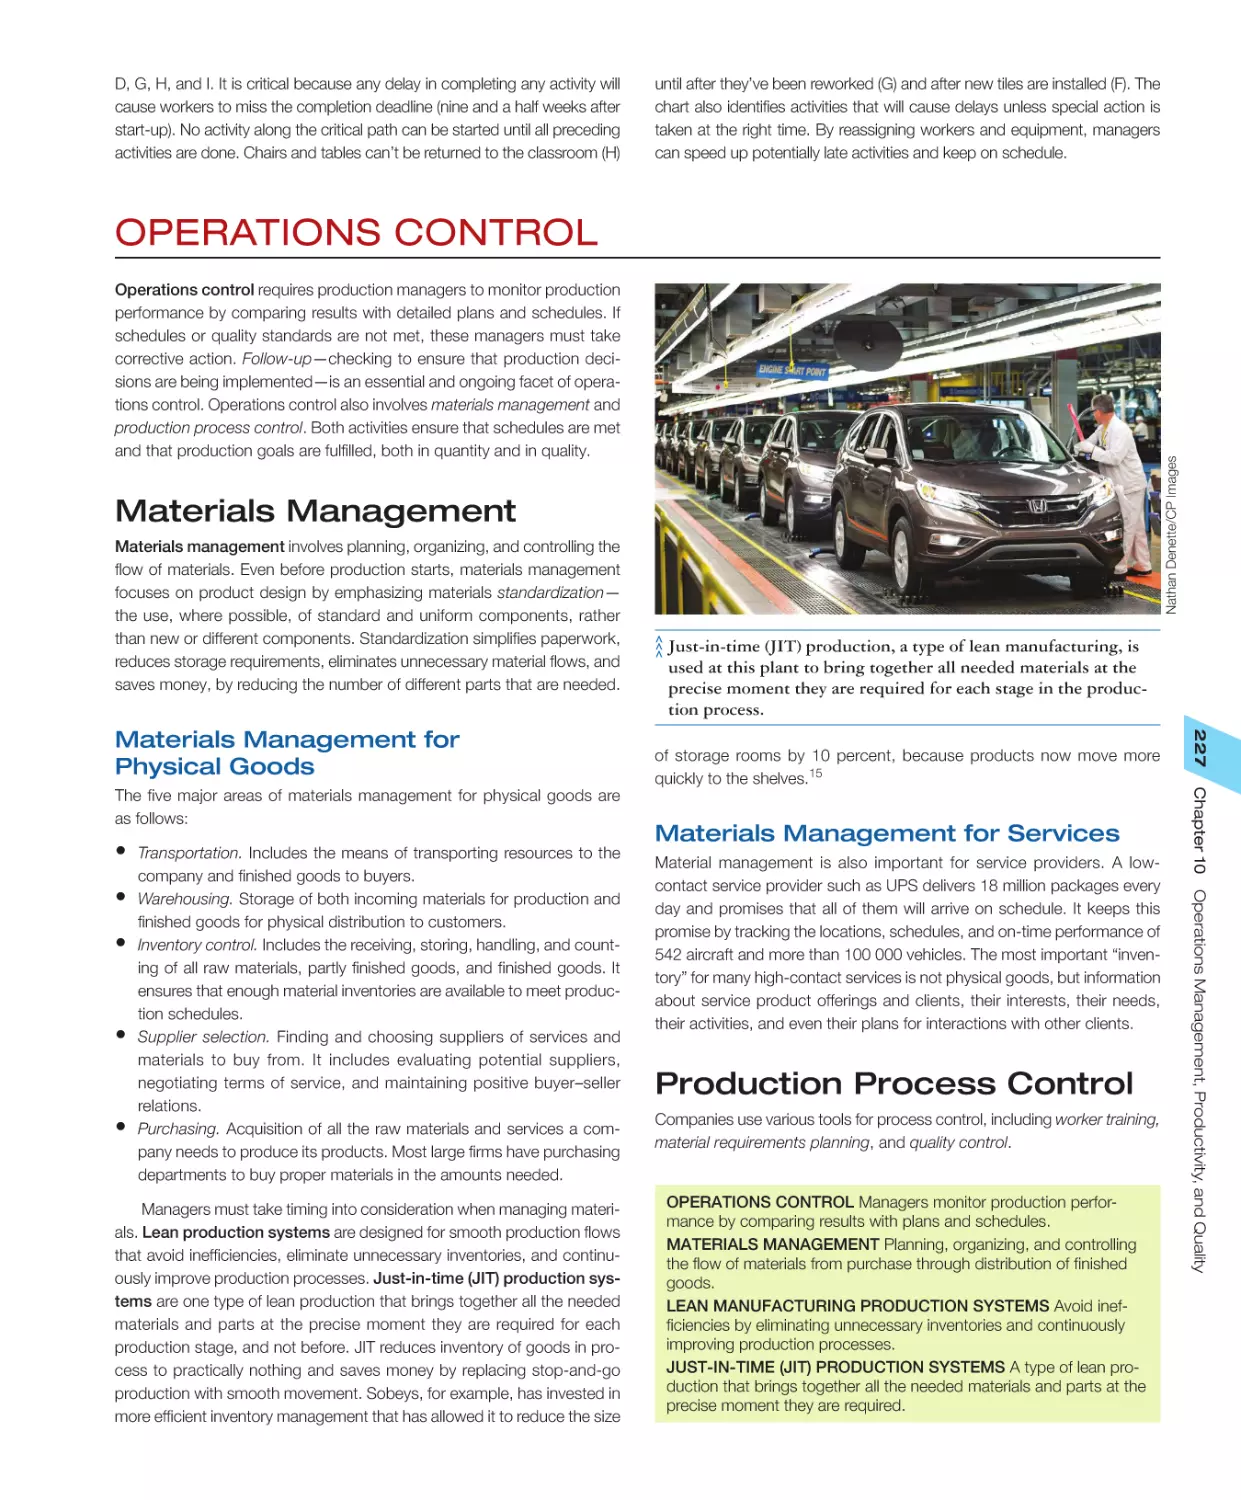 Operations Control
Materials Management
Production Process Control